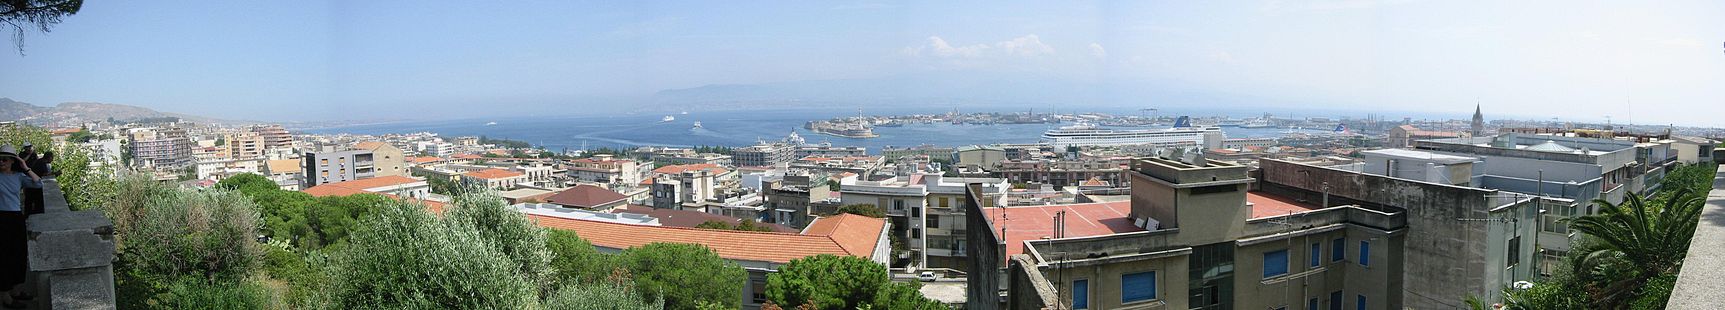 Panorama over Messina